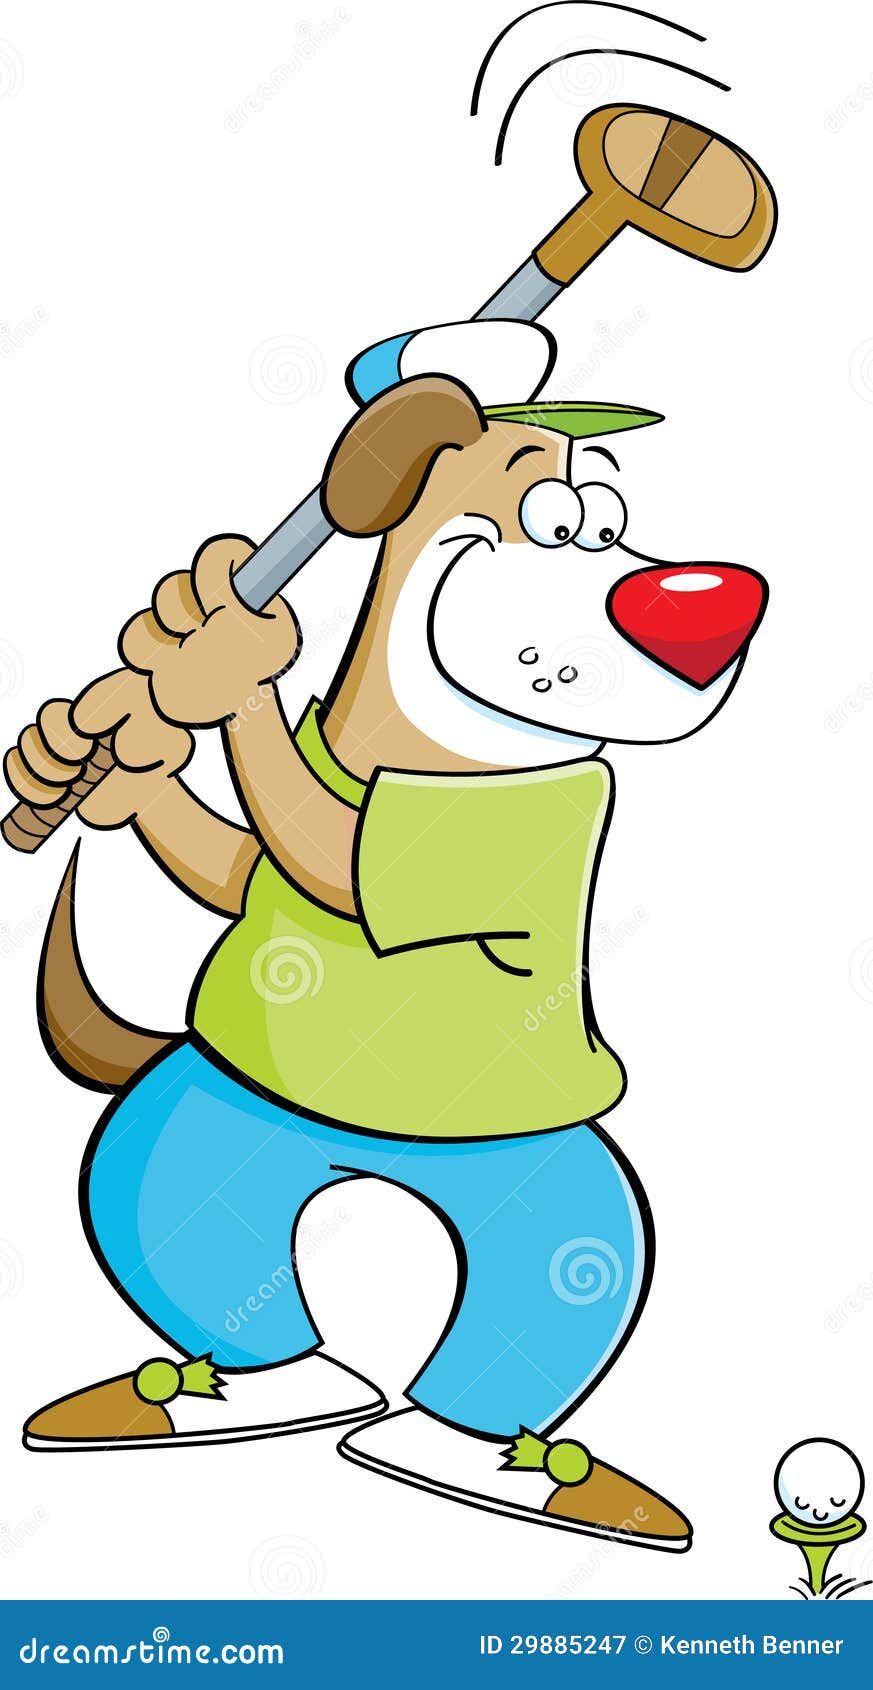 dog golfing clipart - photo #9